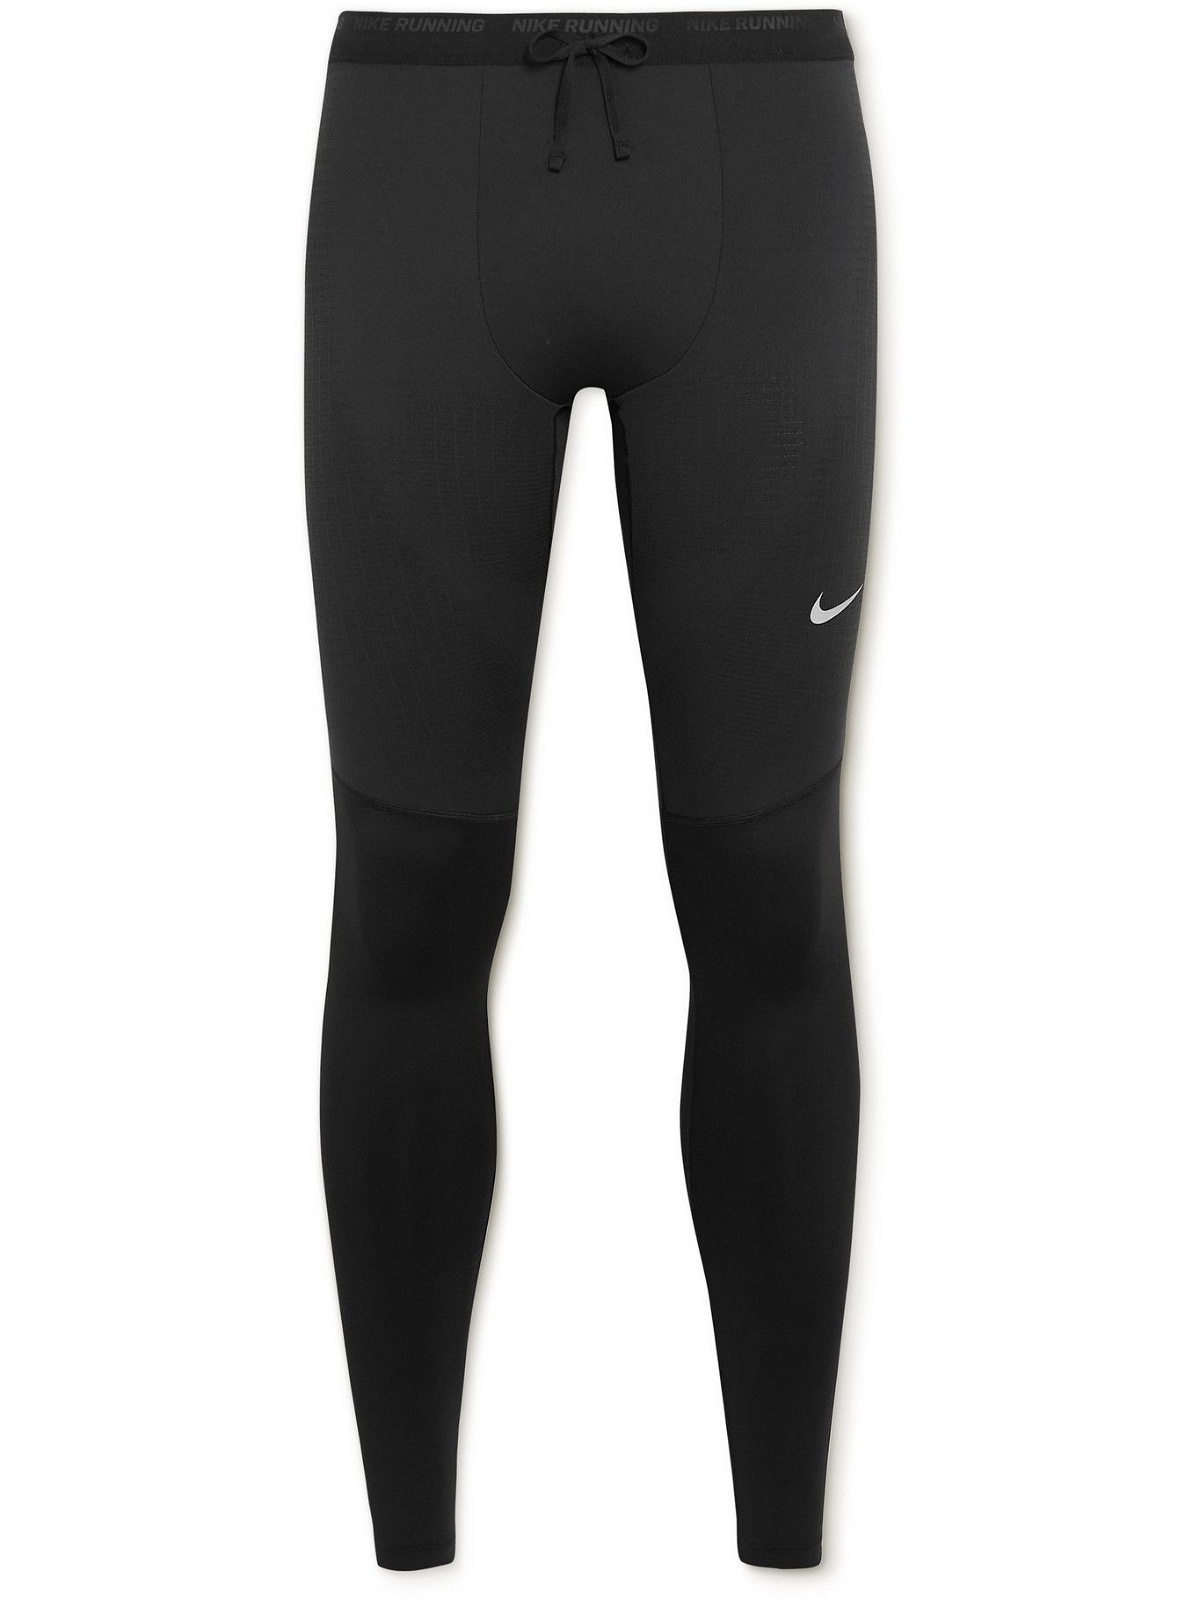 NIKE RUNNING - Phenom Elite Stretch-Jersey Tights - Black Nike Running